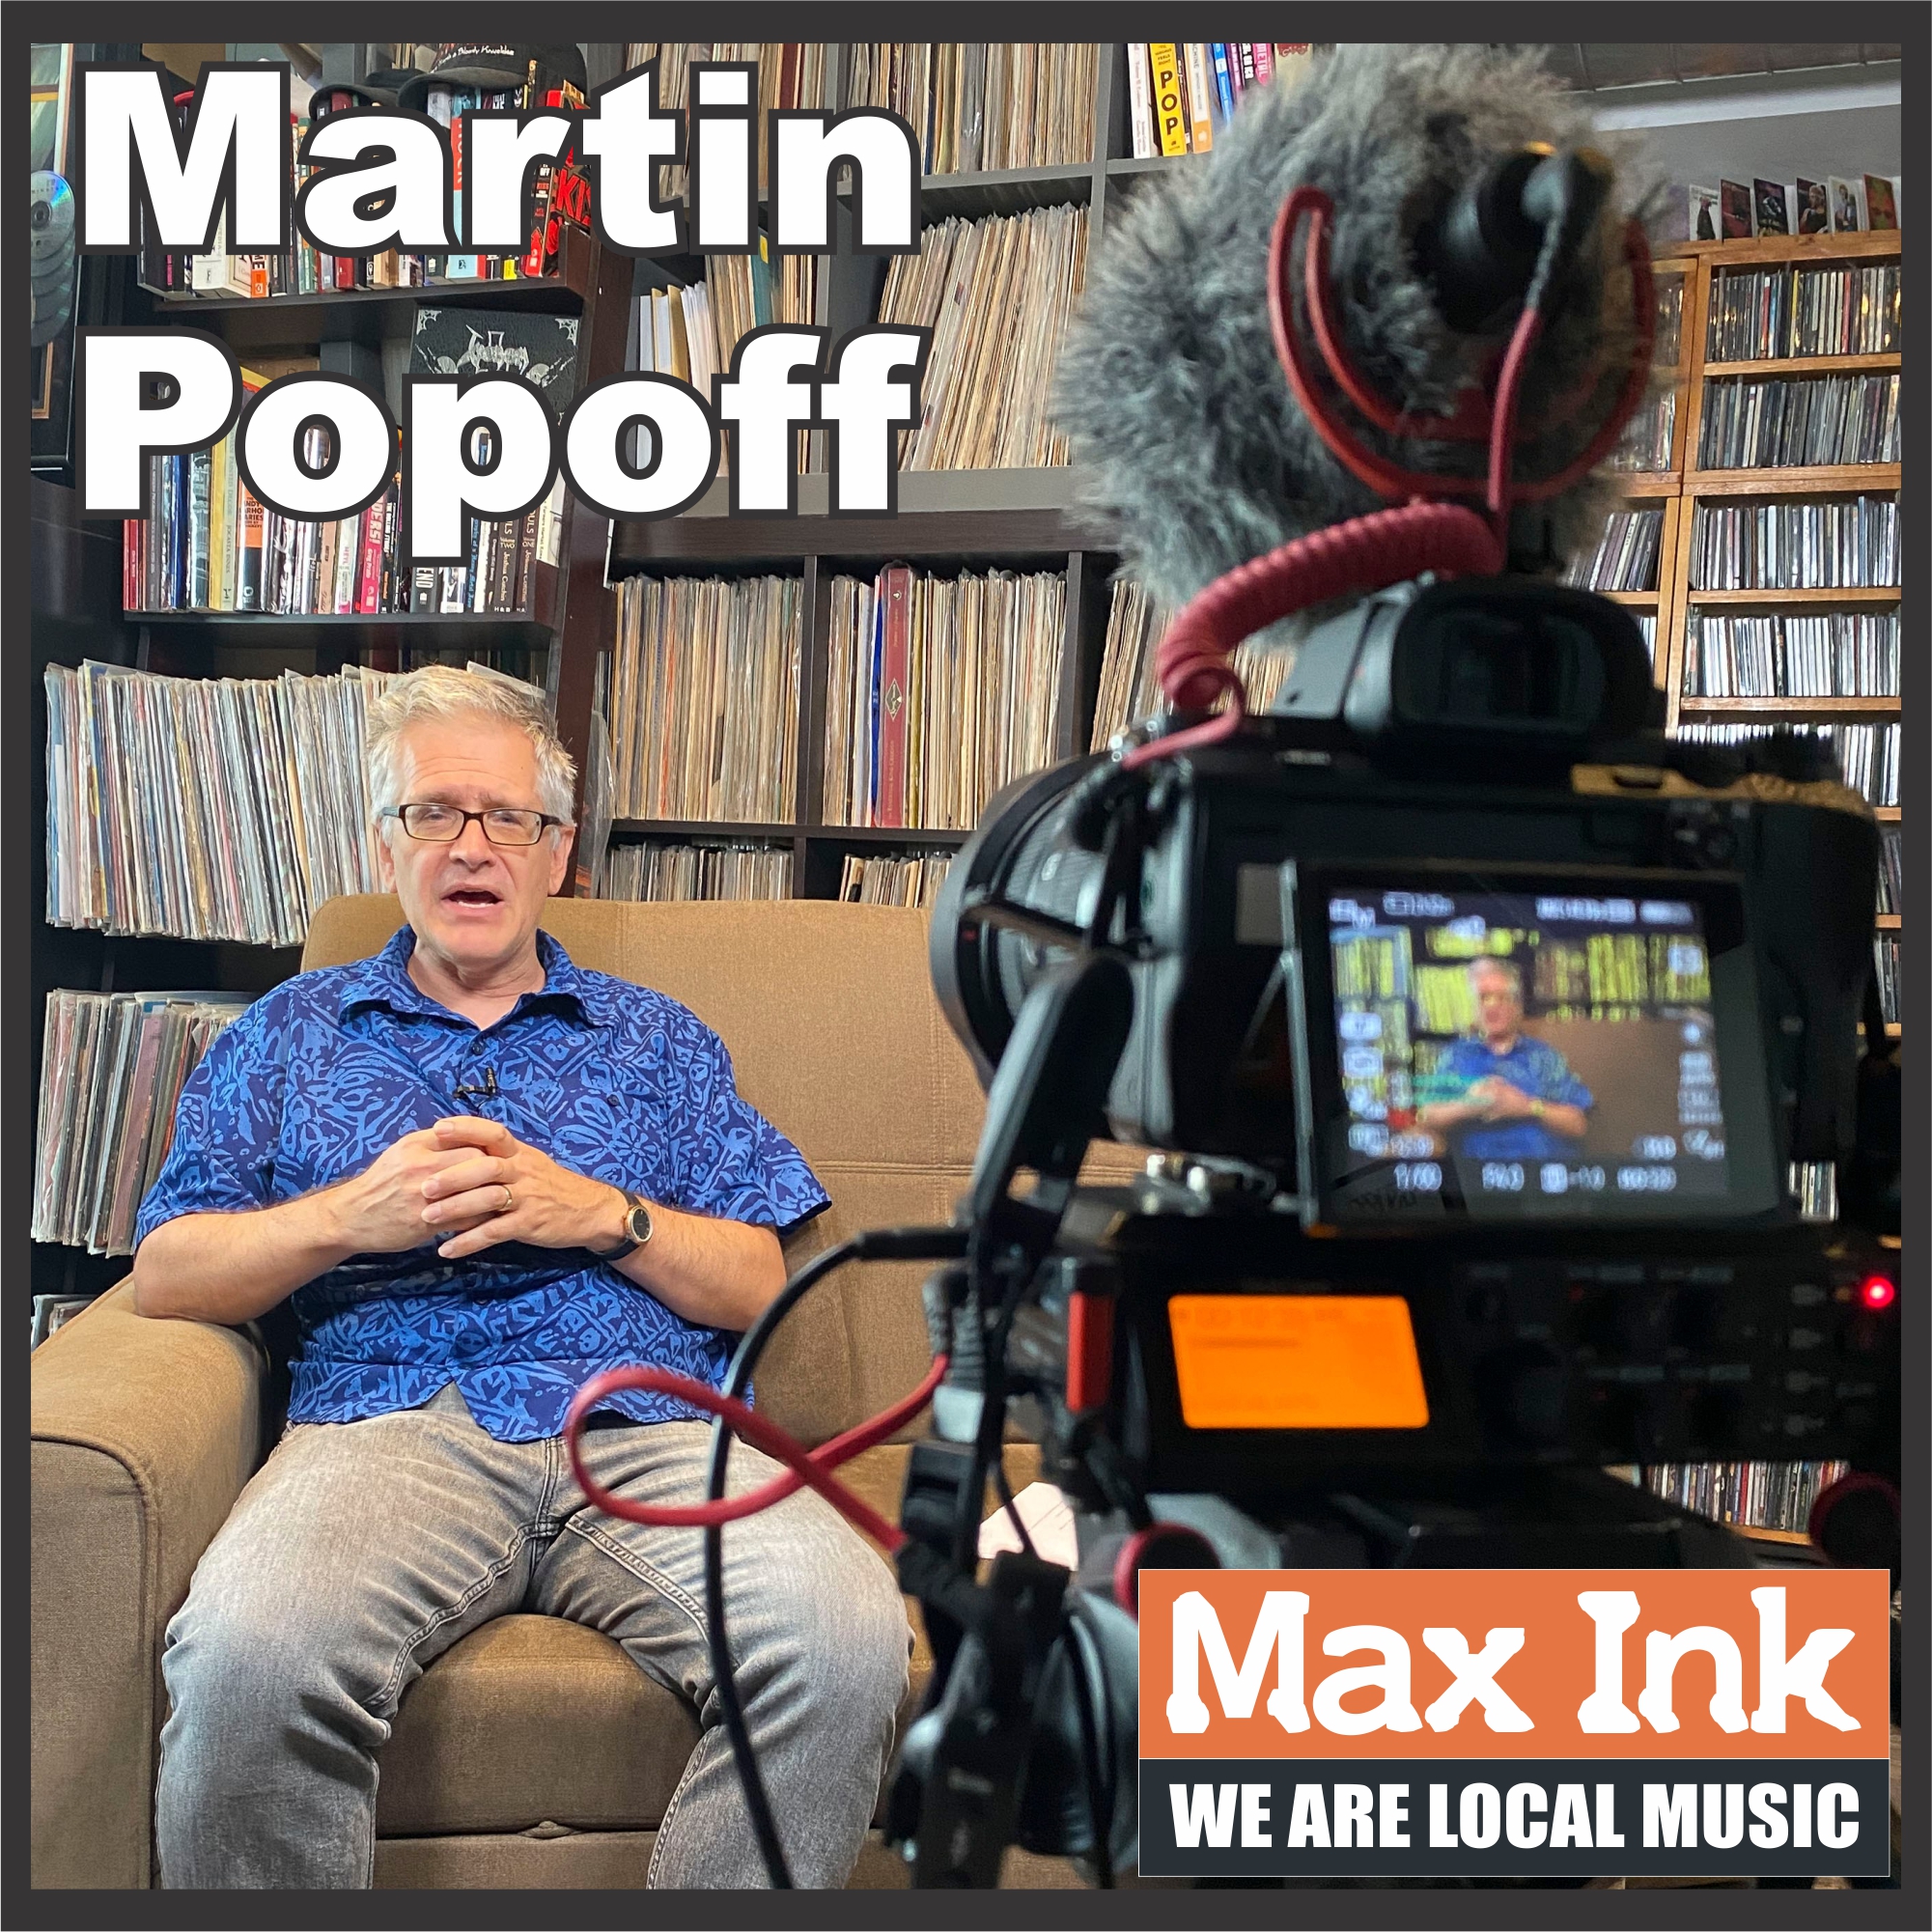 Author and Rock Journalist Martin Popoff